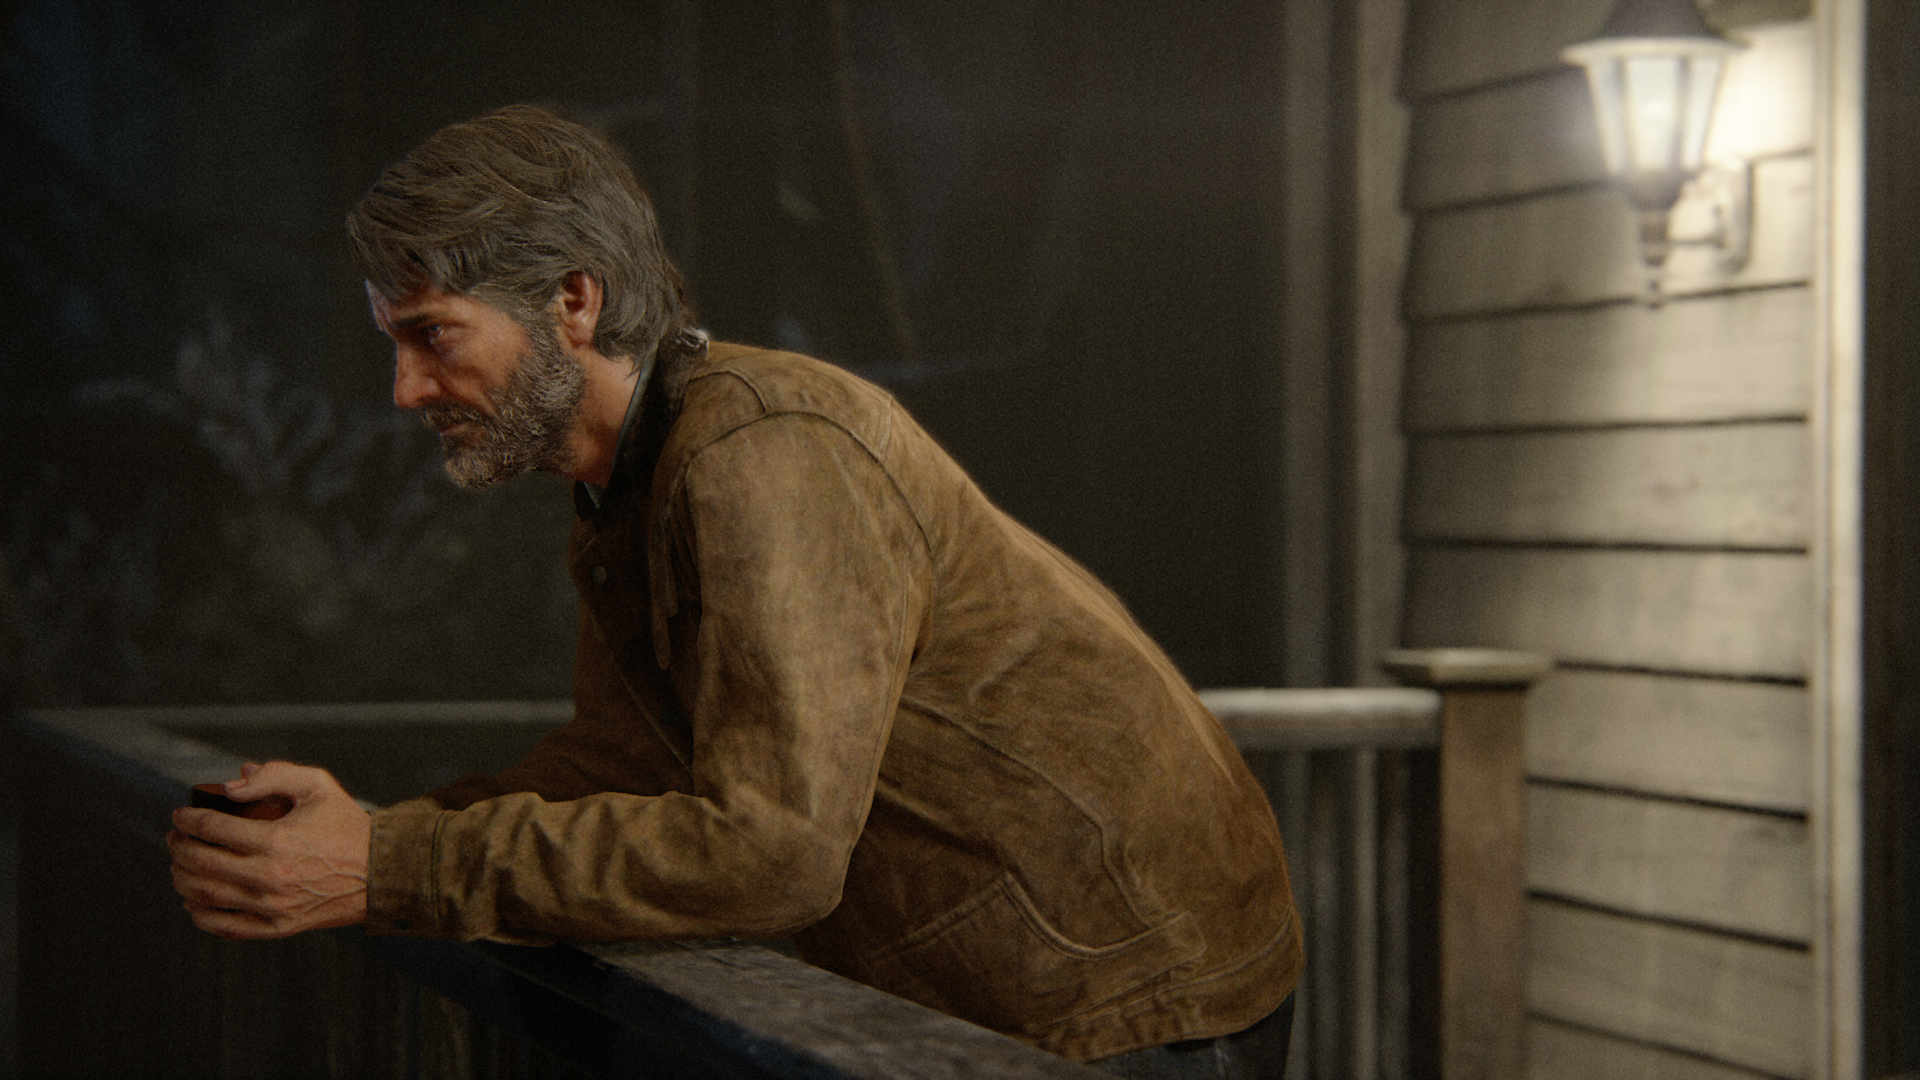 Ator de GOT, Nicolaj está jogando The Last of Us 2 e inicia rumor de que  interpretará Joel na série de TV